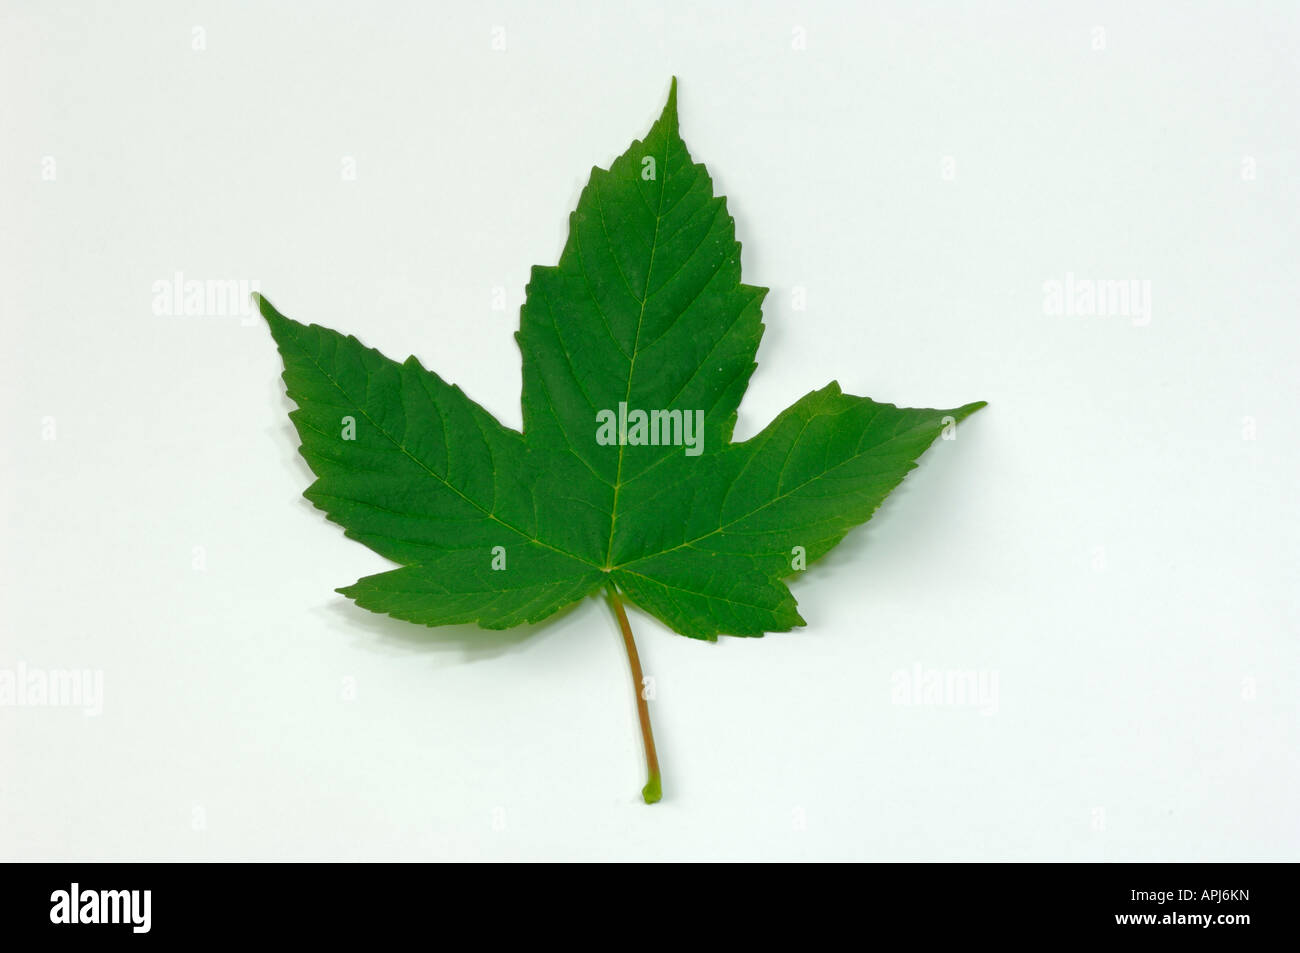 Sycamore Great Maple (Acer pseudoplatanus) leaf studio picture Stock Photo